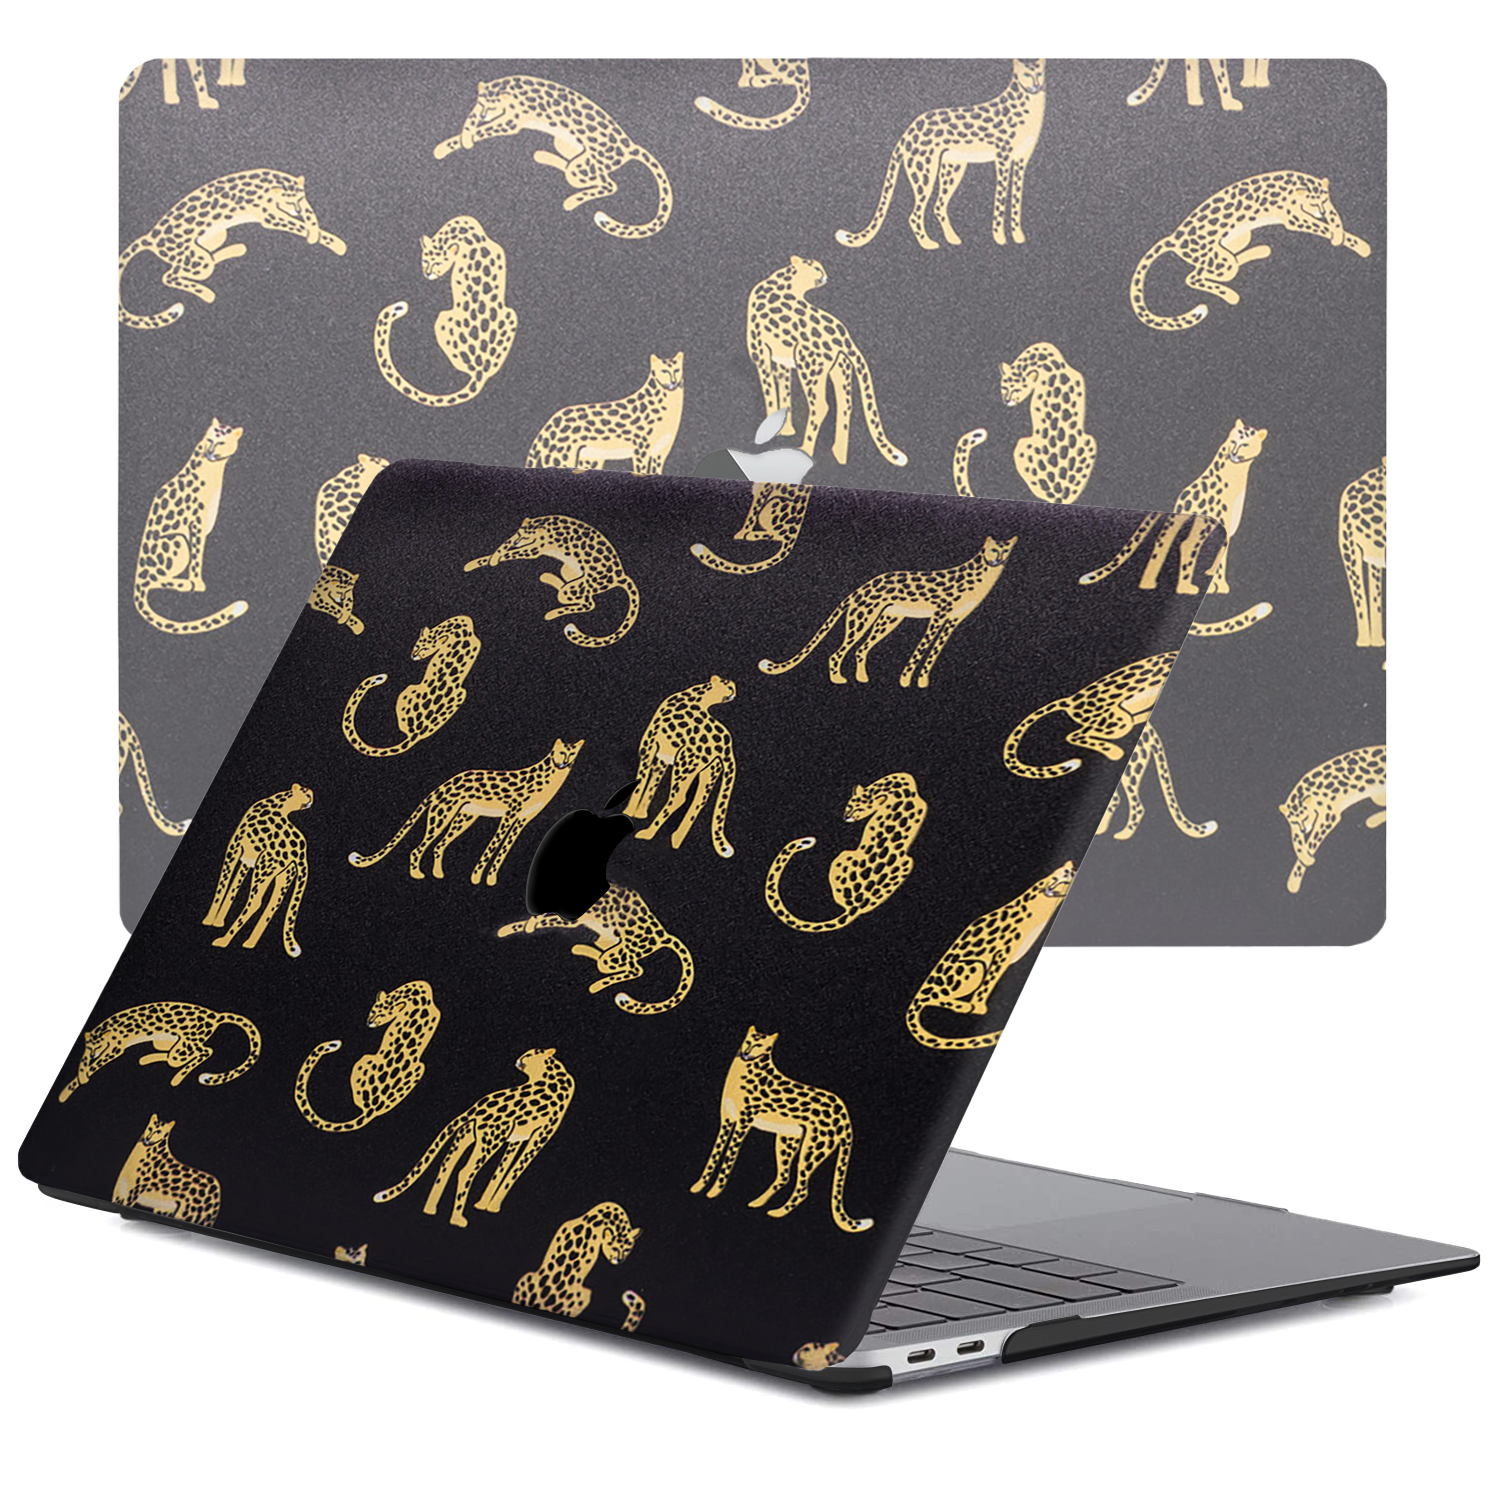 Lunso Leopard Black cover hoes voor de MacBook Air 13 inch (2020)